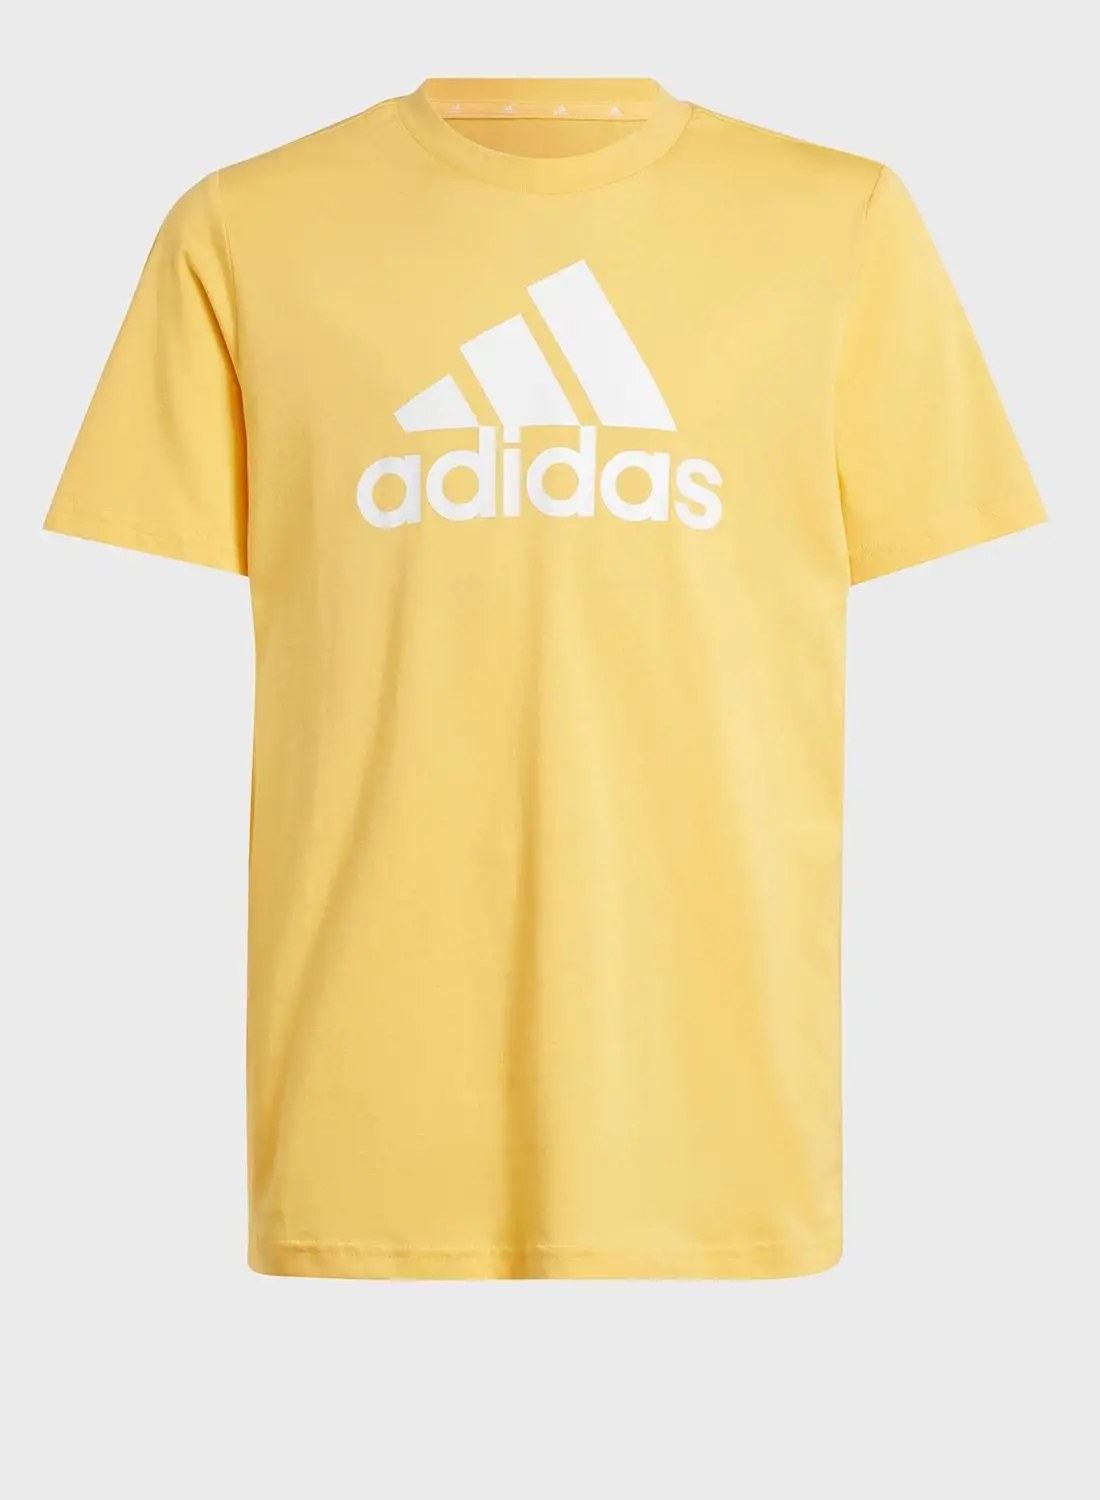 Adidas Unisex Big Logo T-Shirt